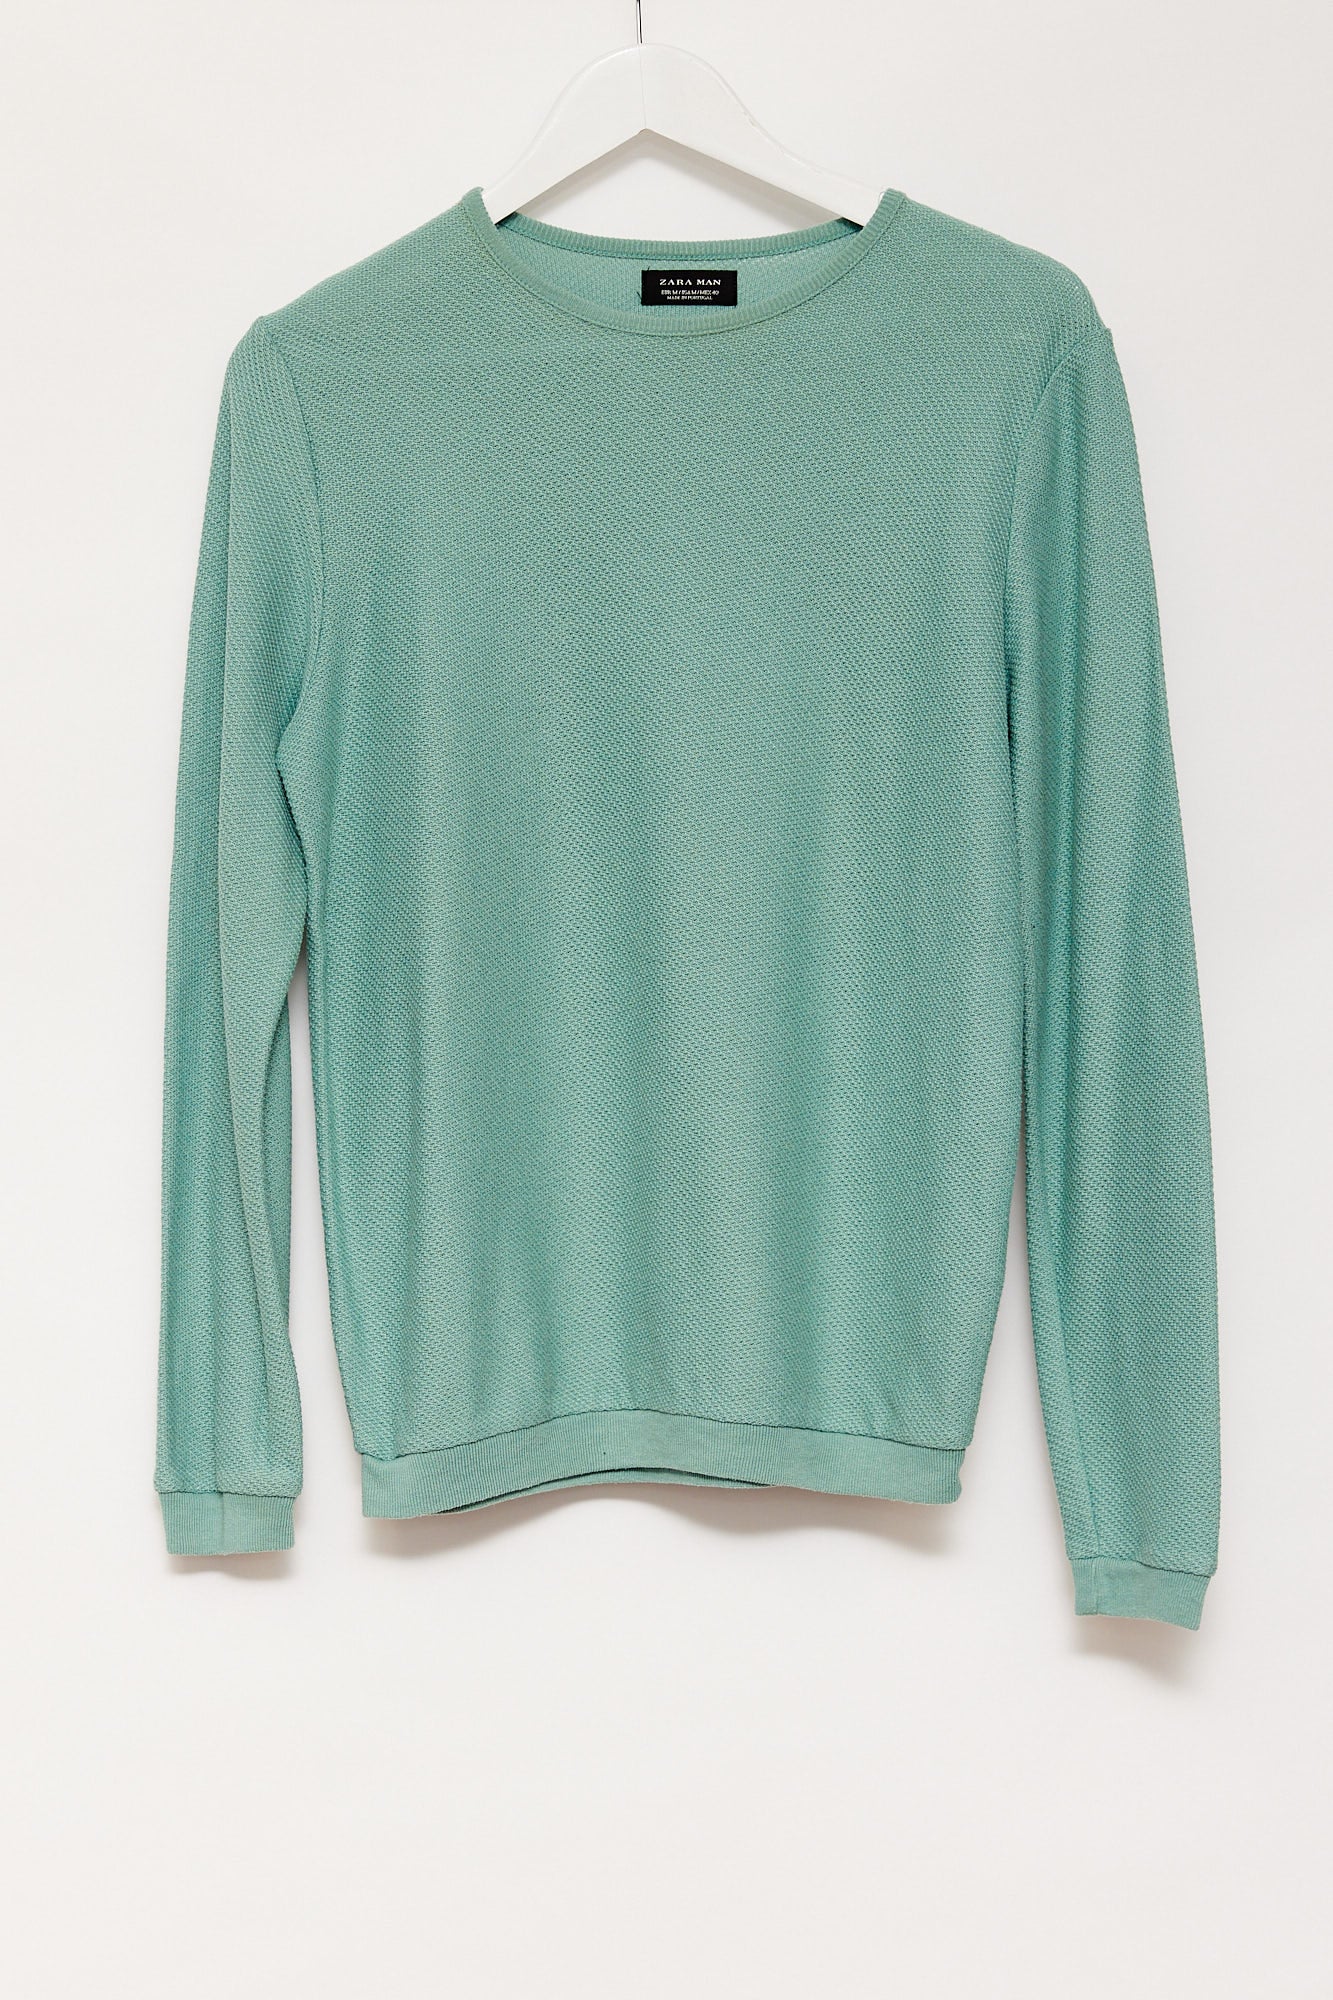 Mens Zara green textured sweater size medium